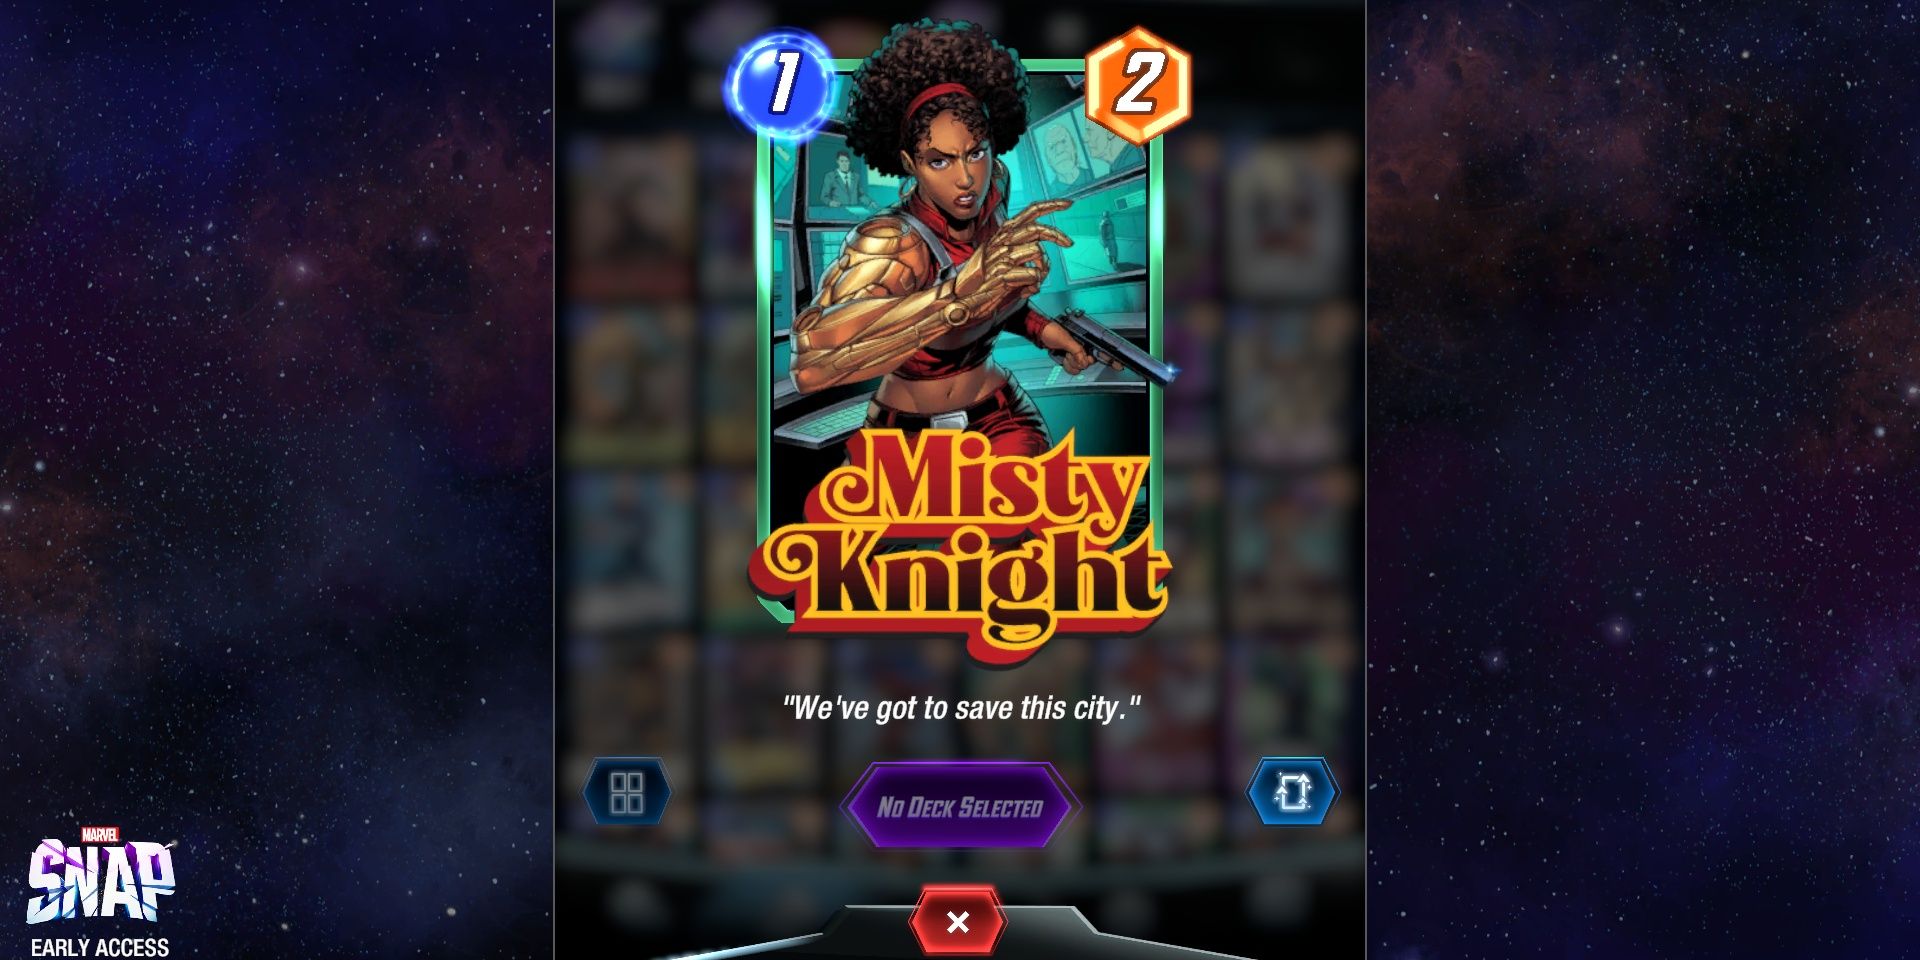 Misty Knight's Card in Marvel Snap.